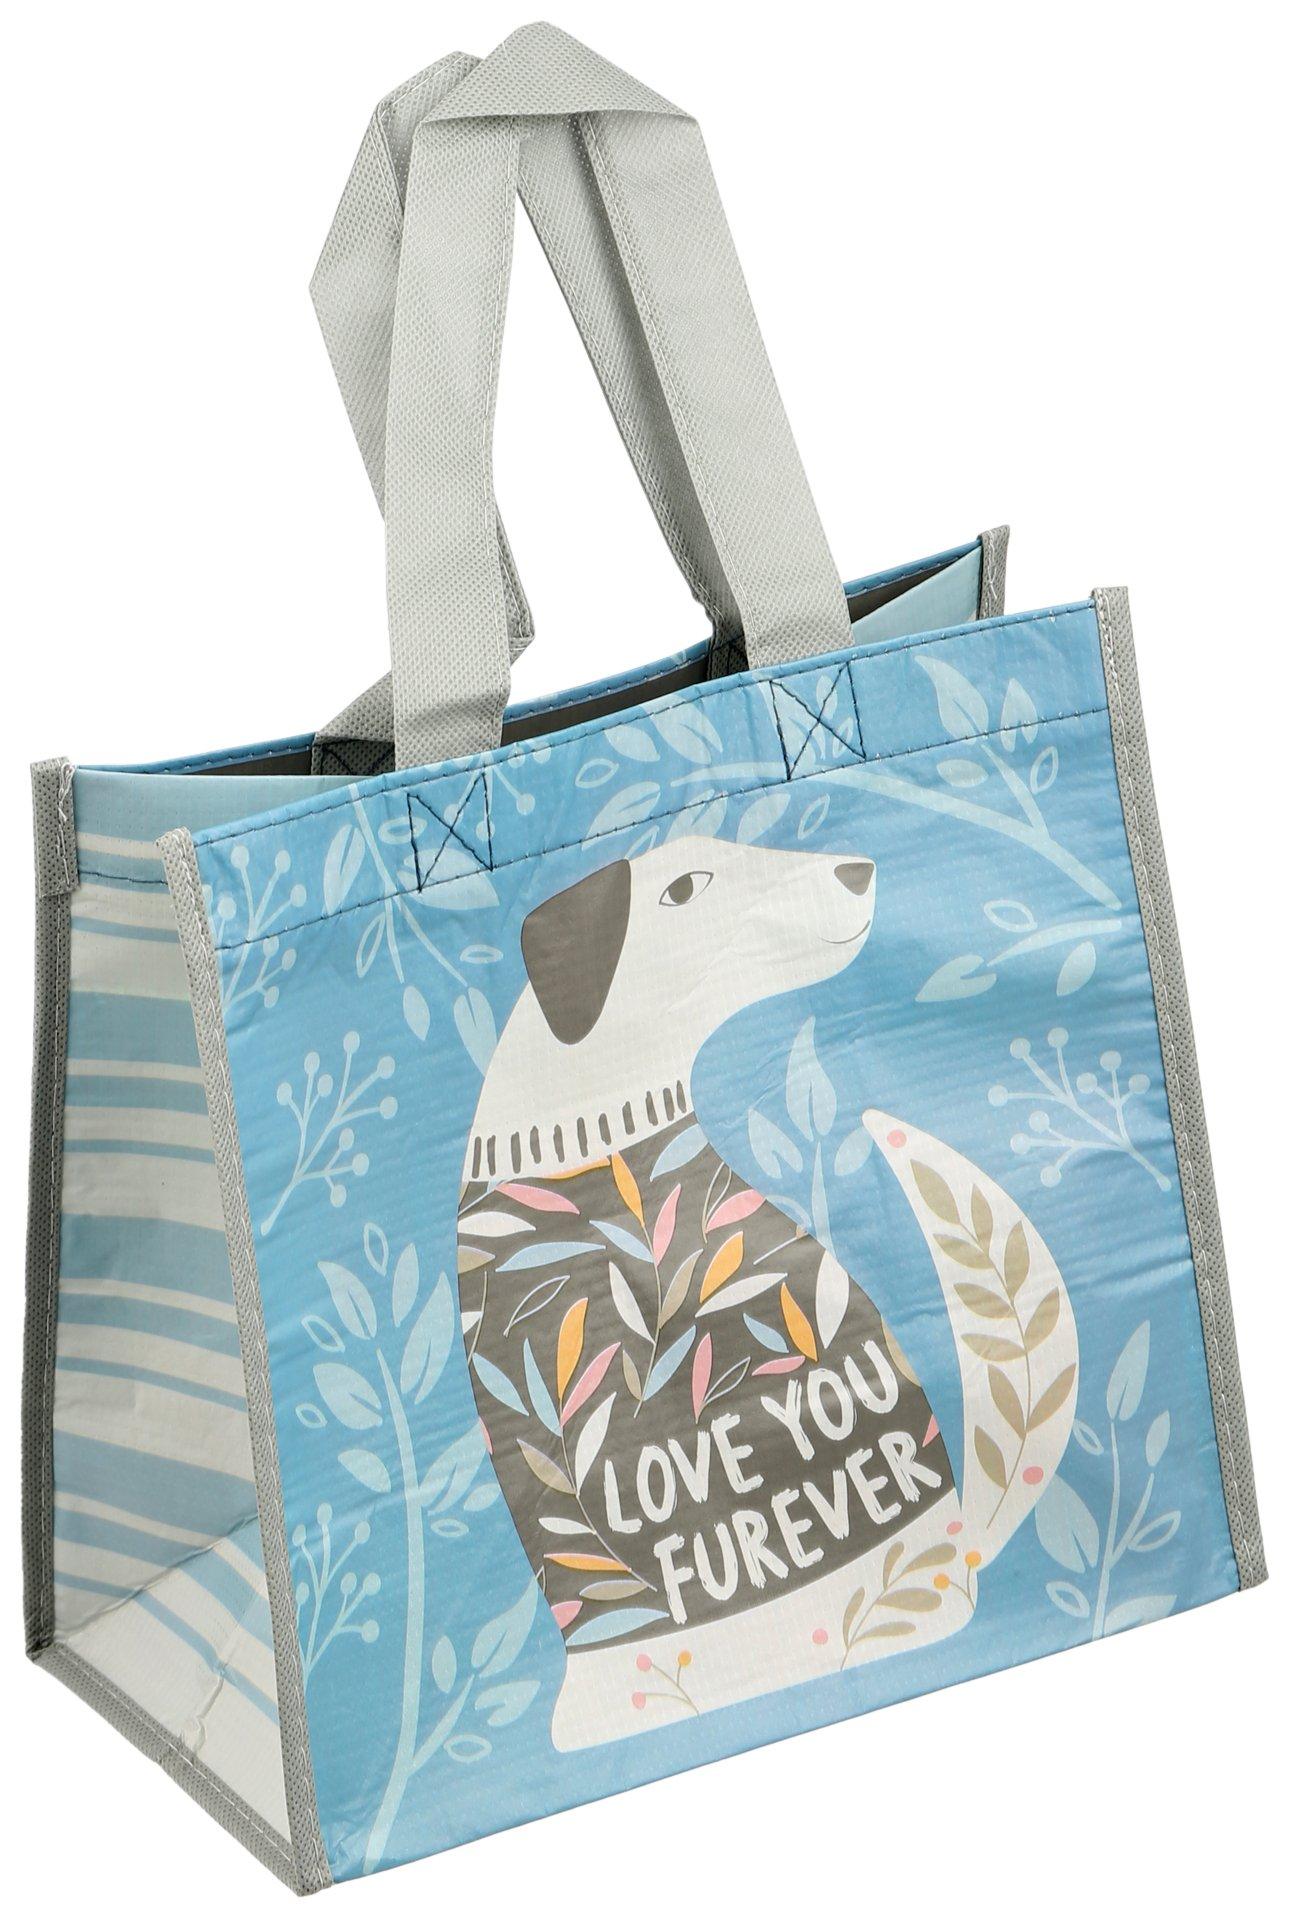 Love You Forever Dog Print Reusable Gift Tote Bag